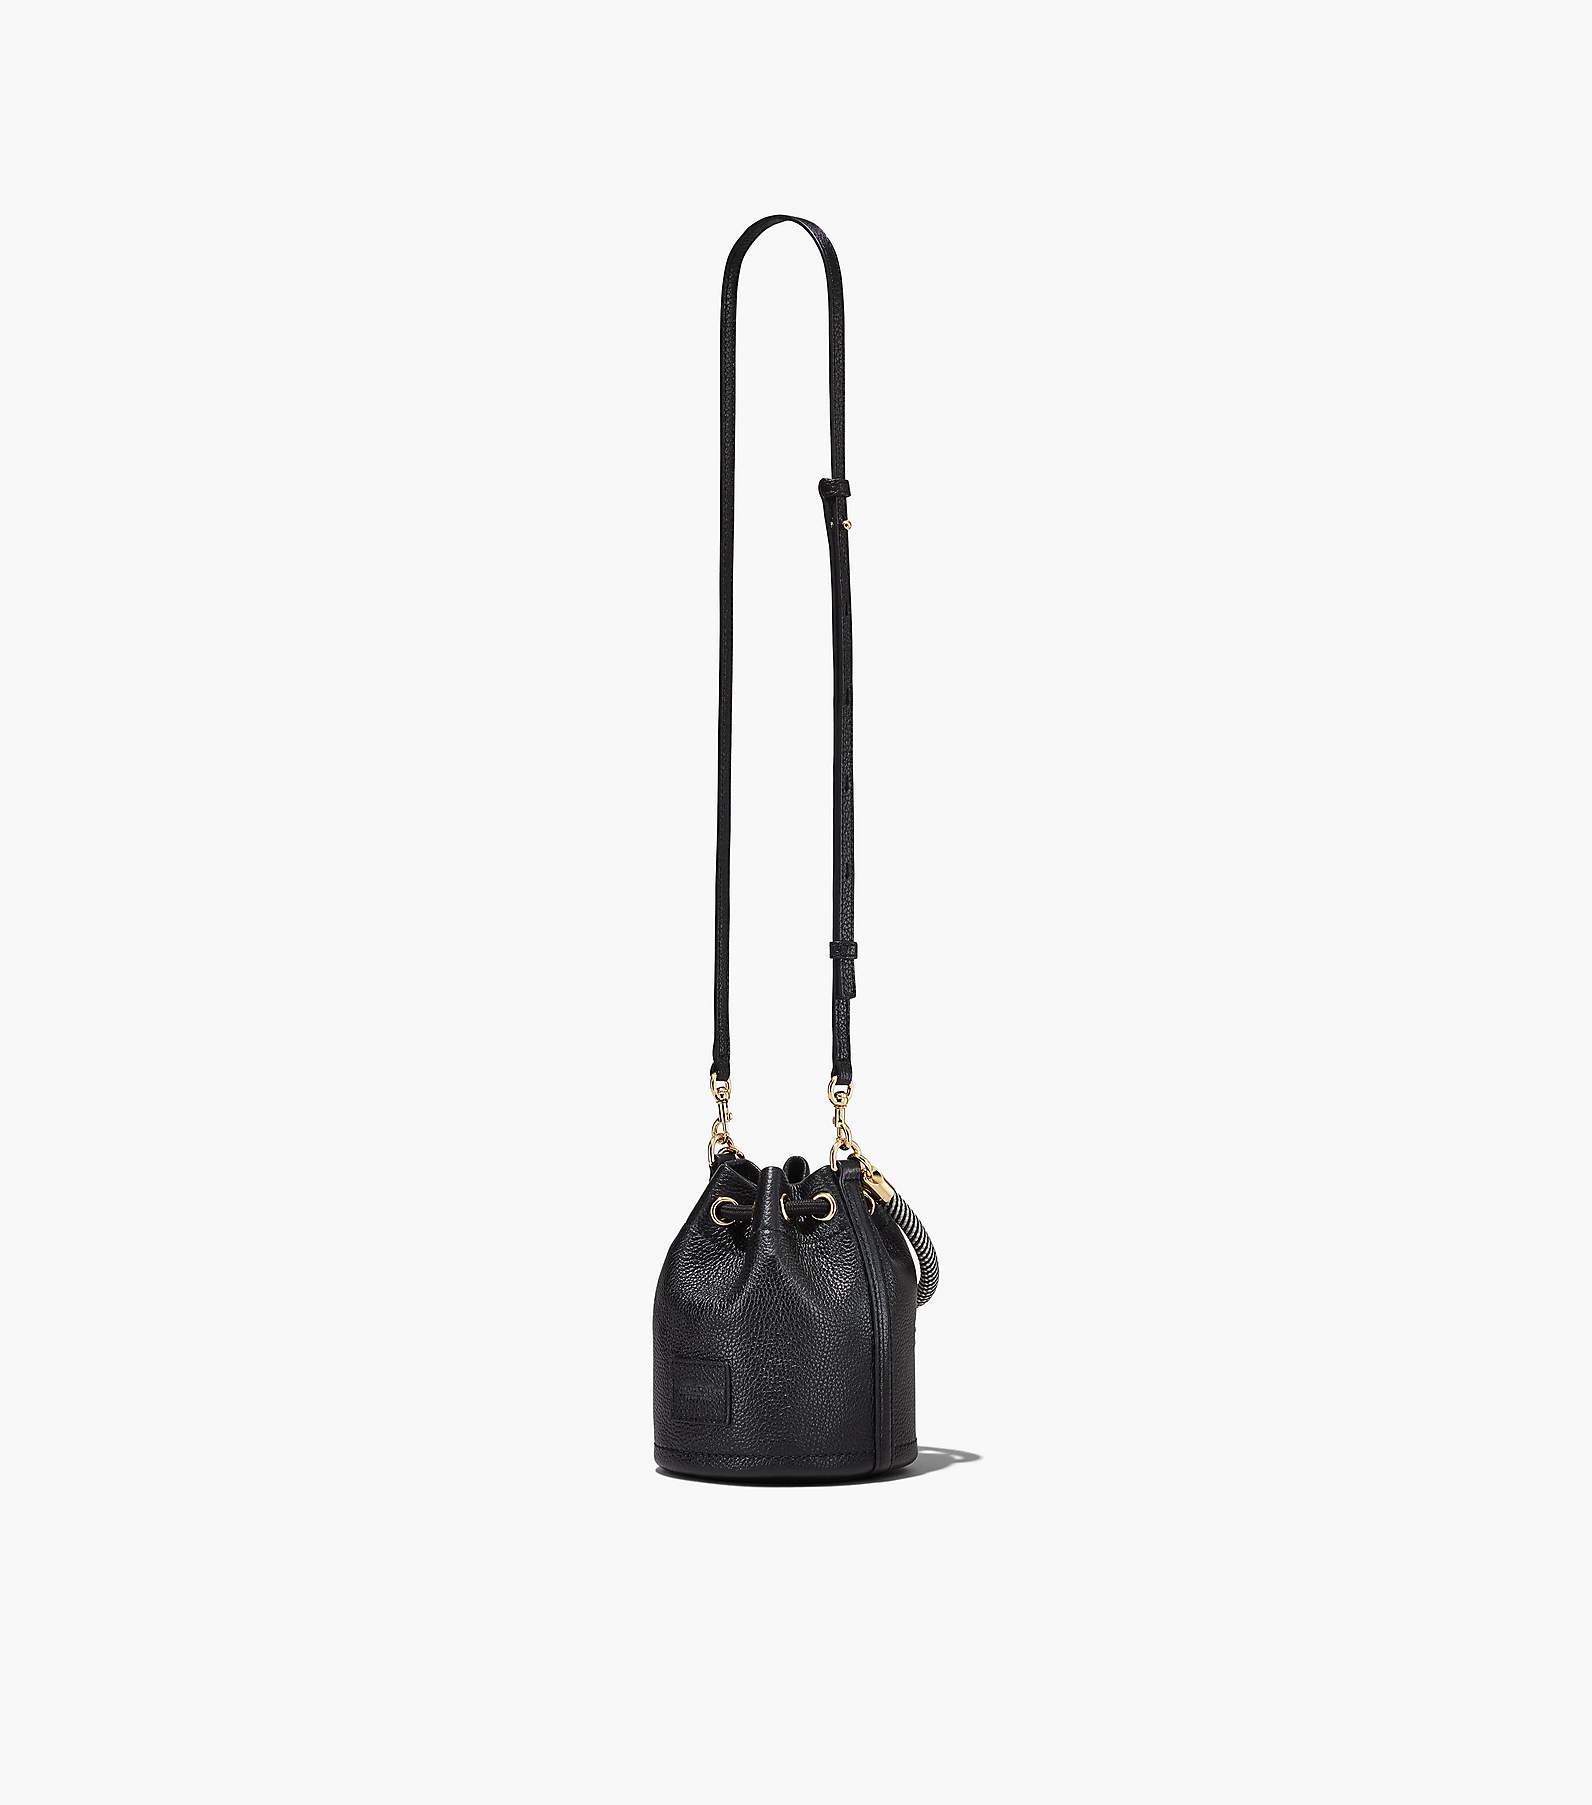 Fendi First Sight - Black leather mini bag